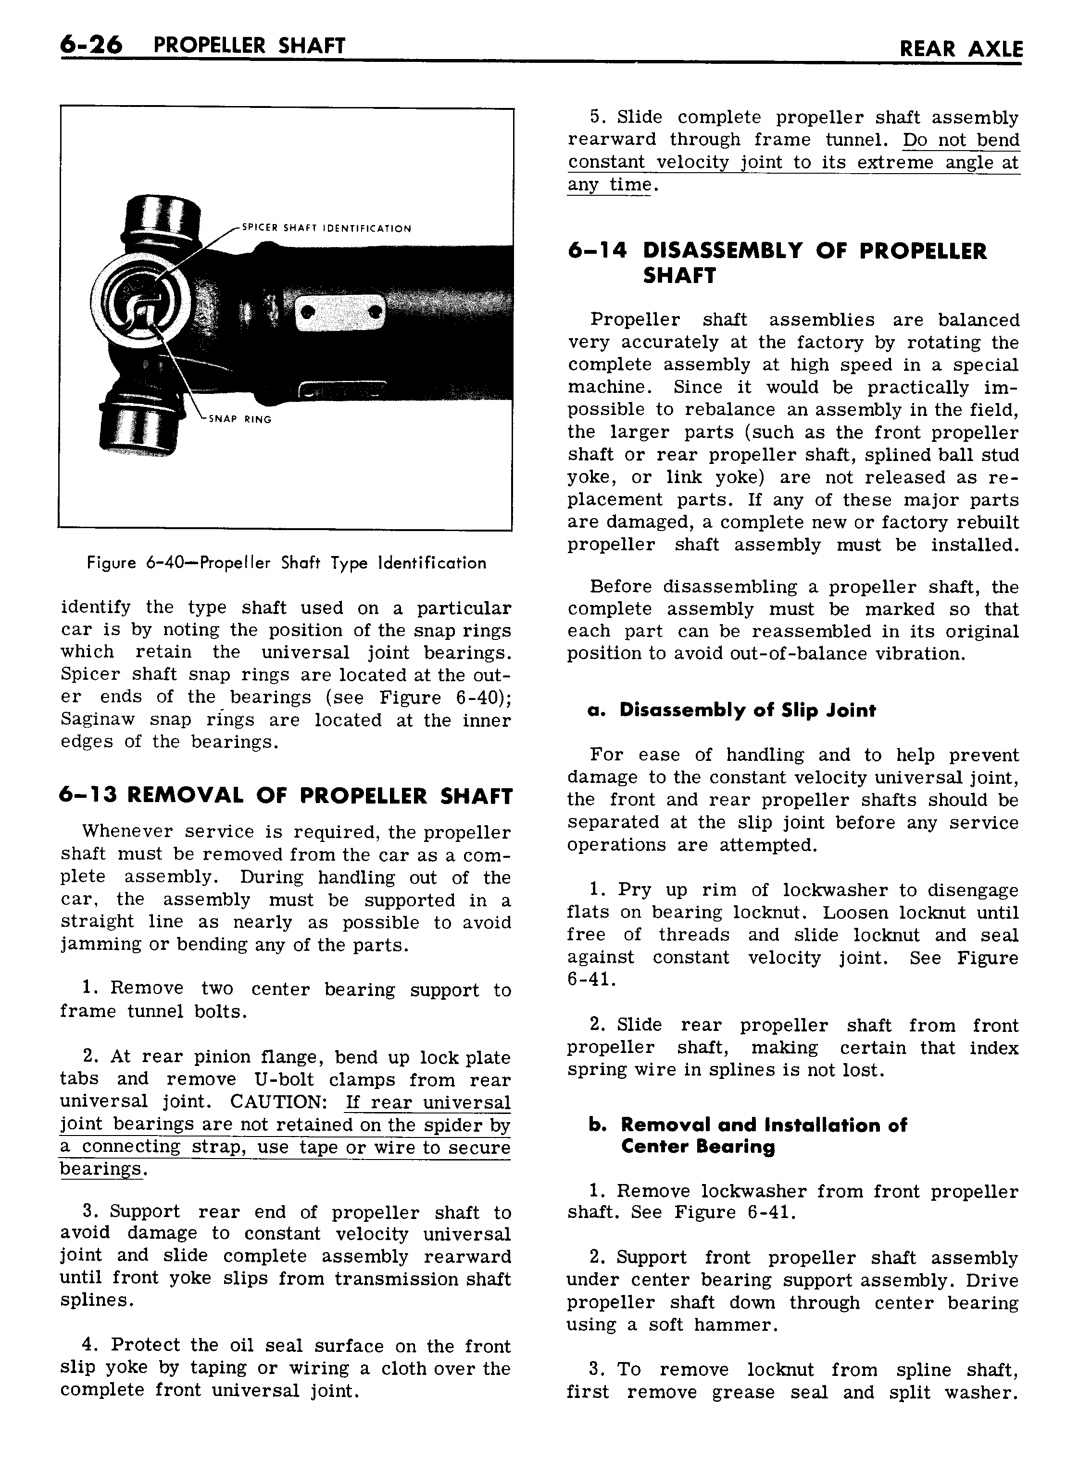 n_06 1961 Buick Shop Manual - Rear Axle-026-026.jpg